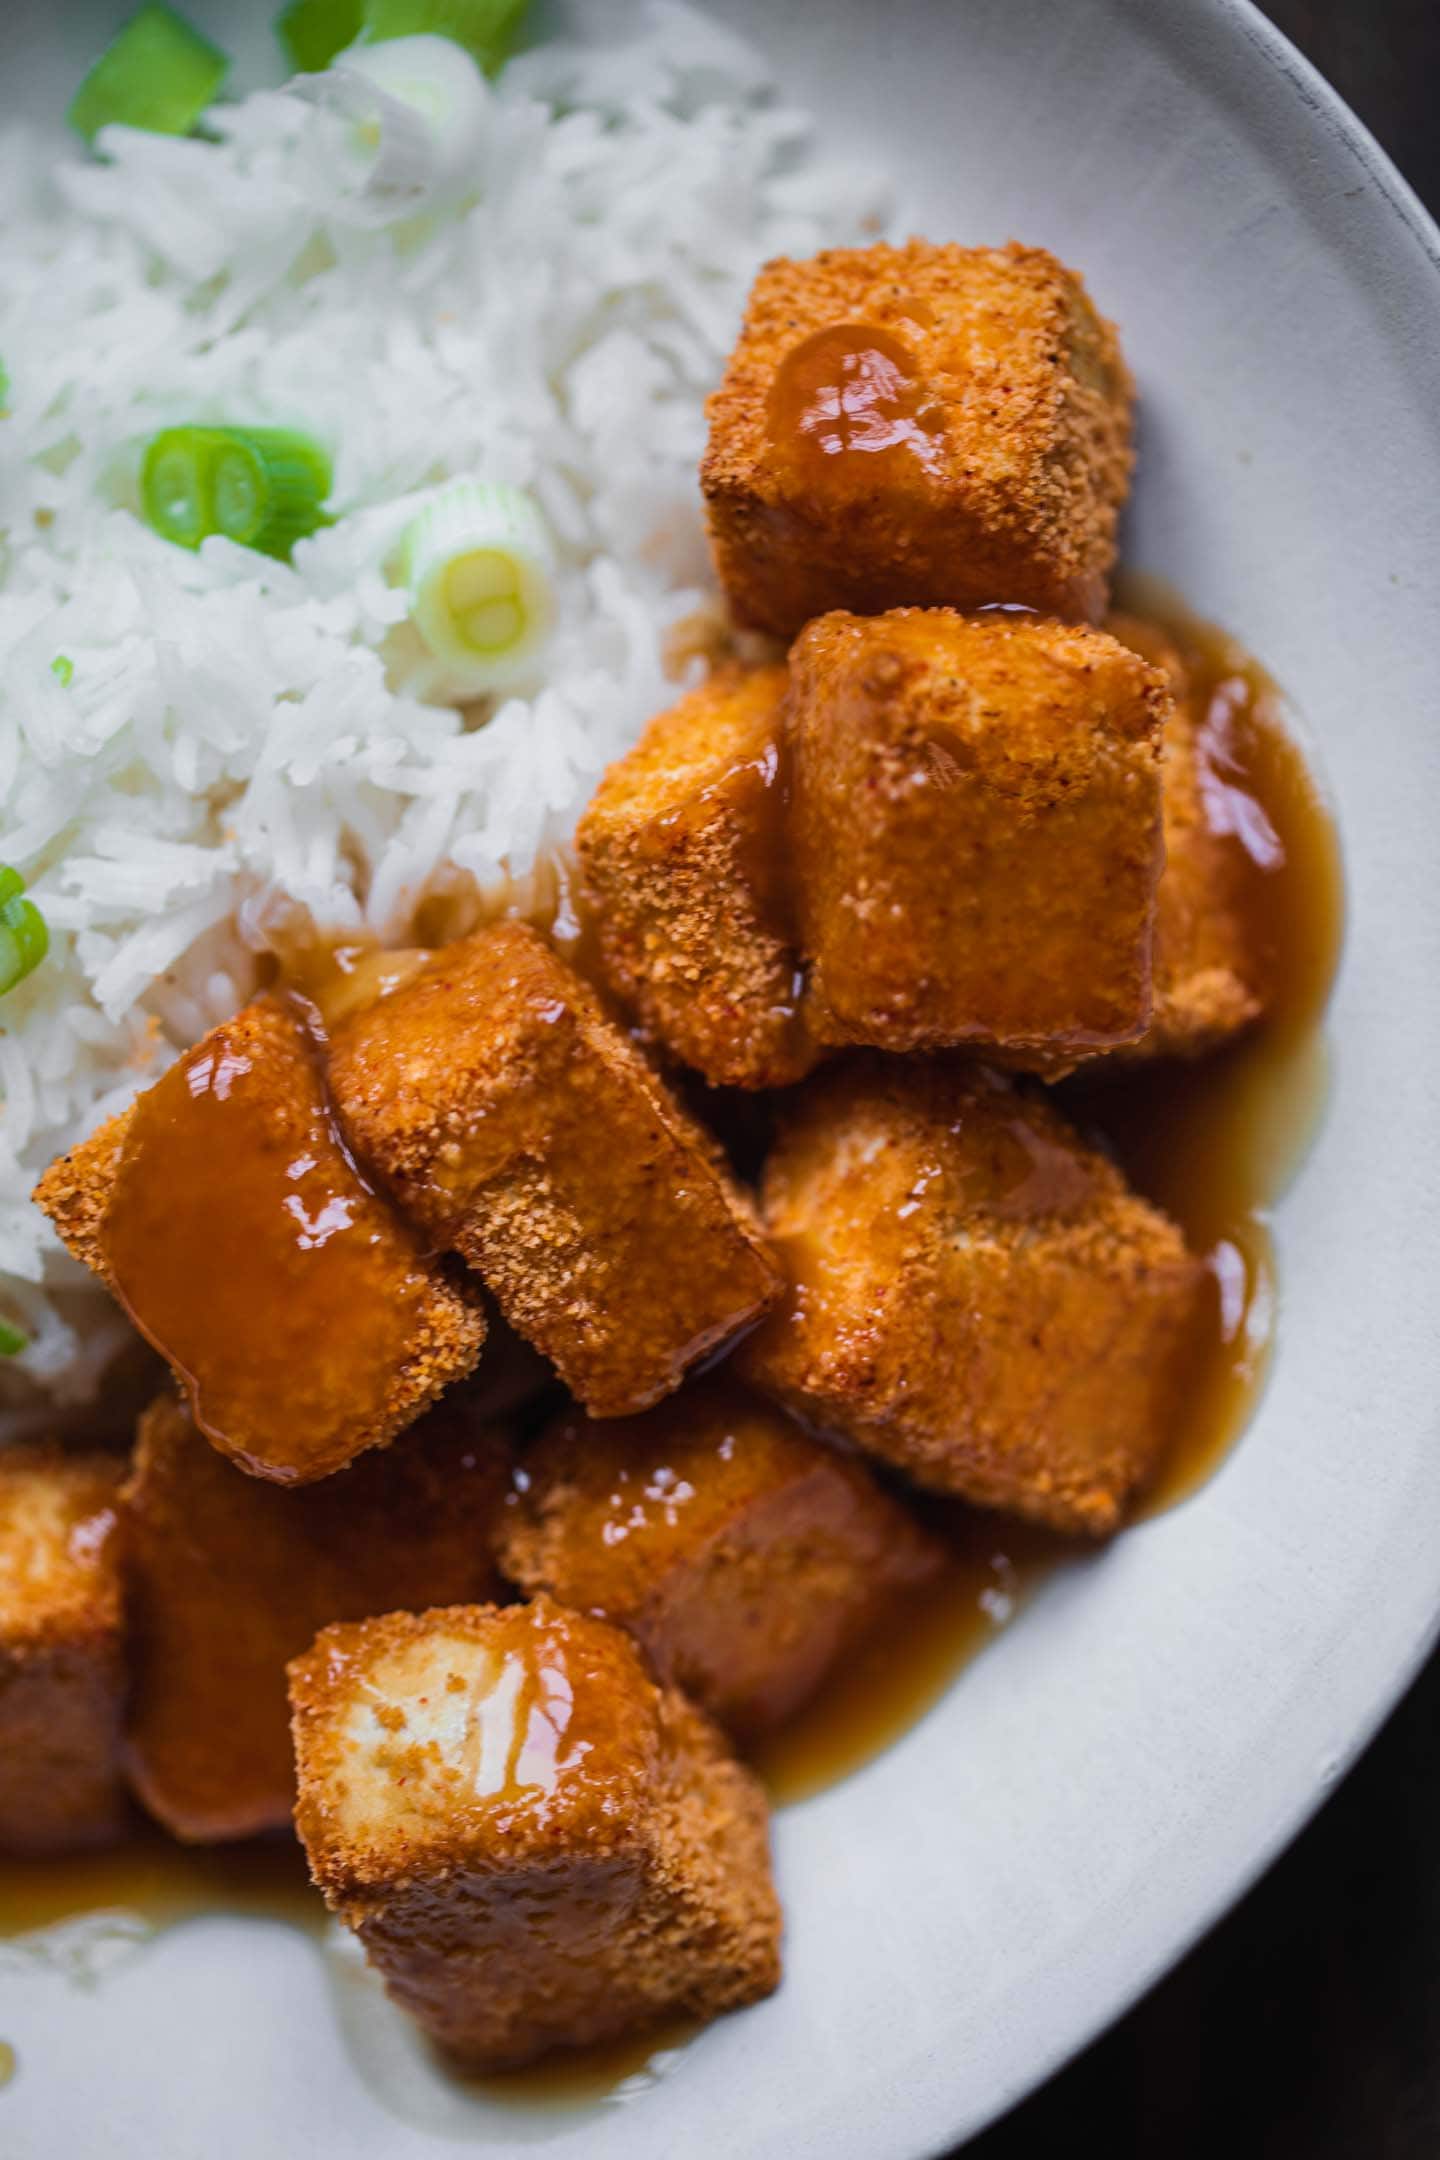 Easy vegan crispy tofu baked or fried